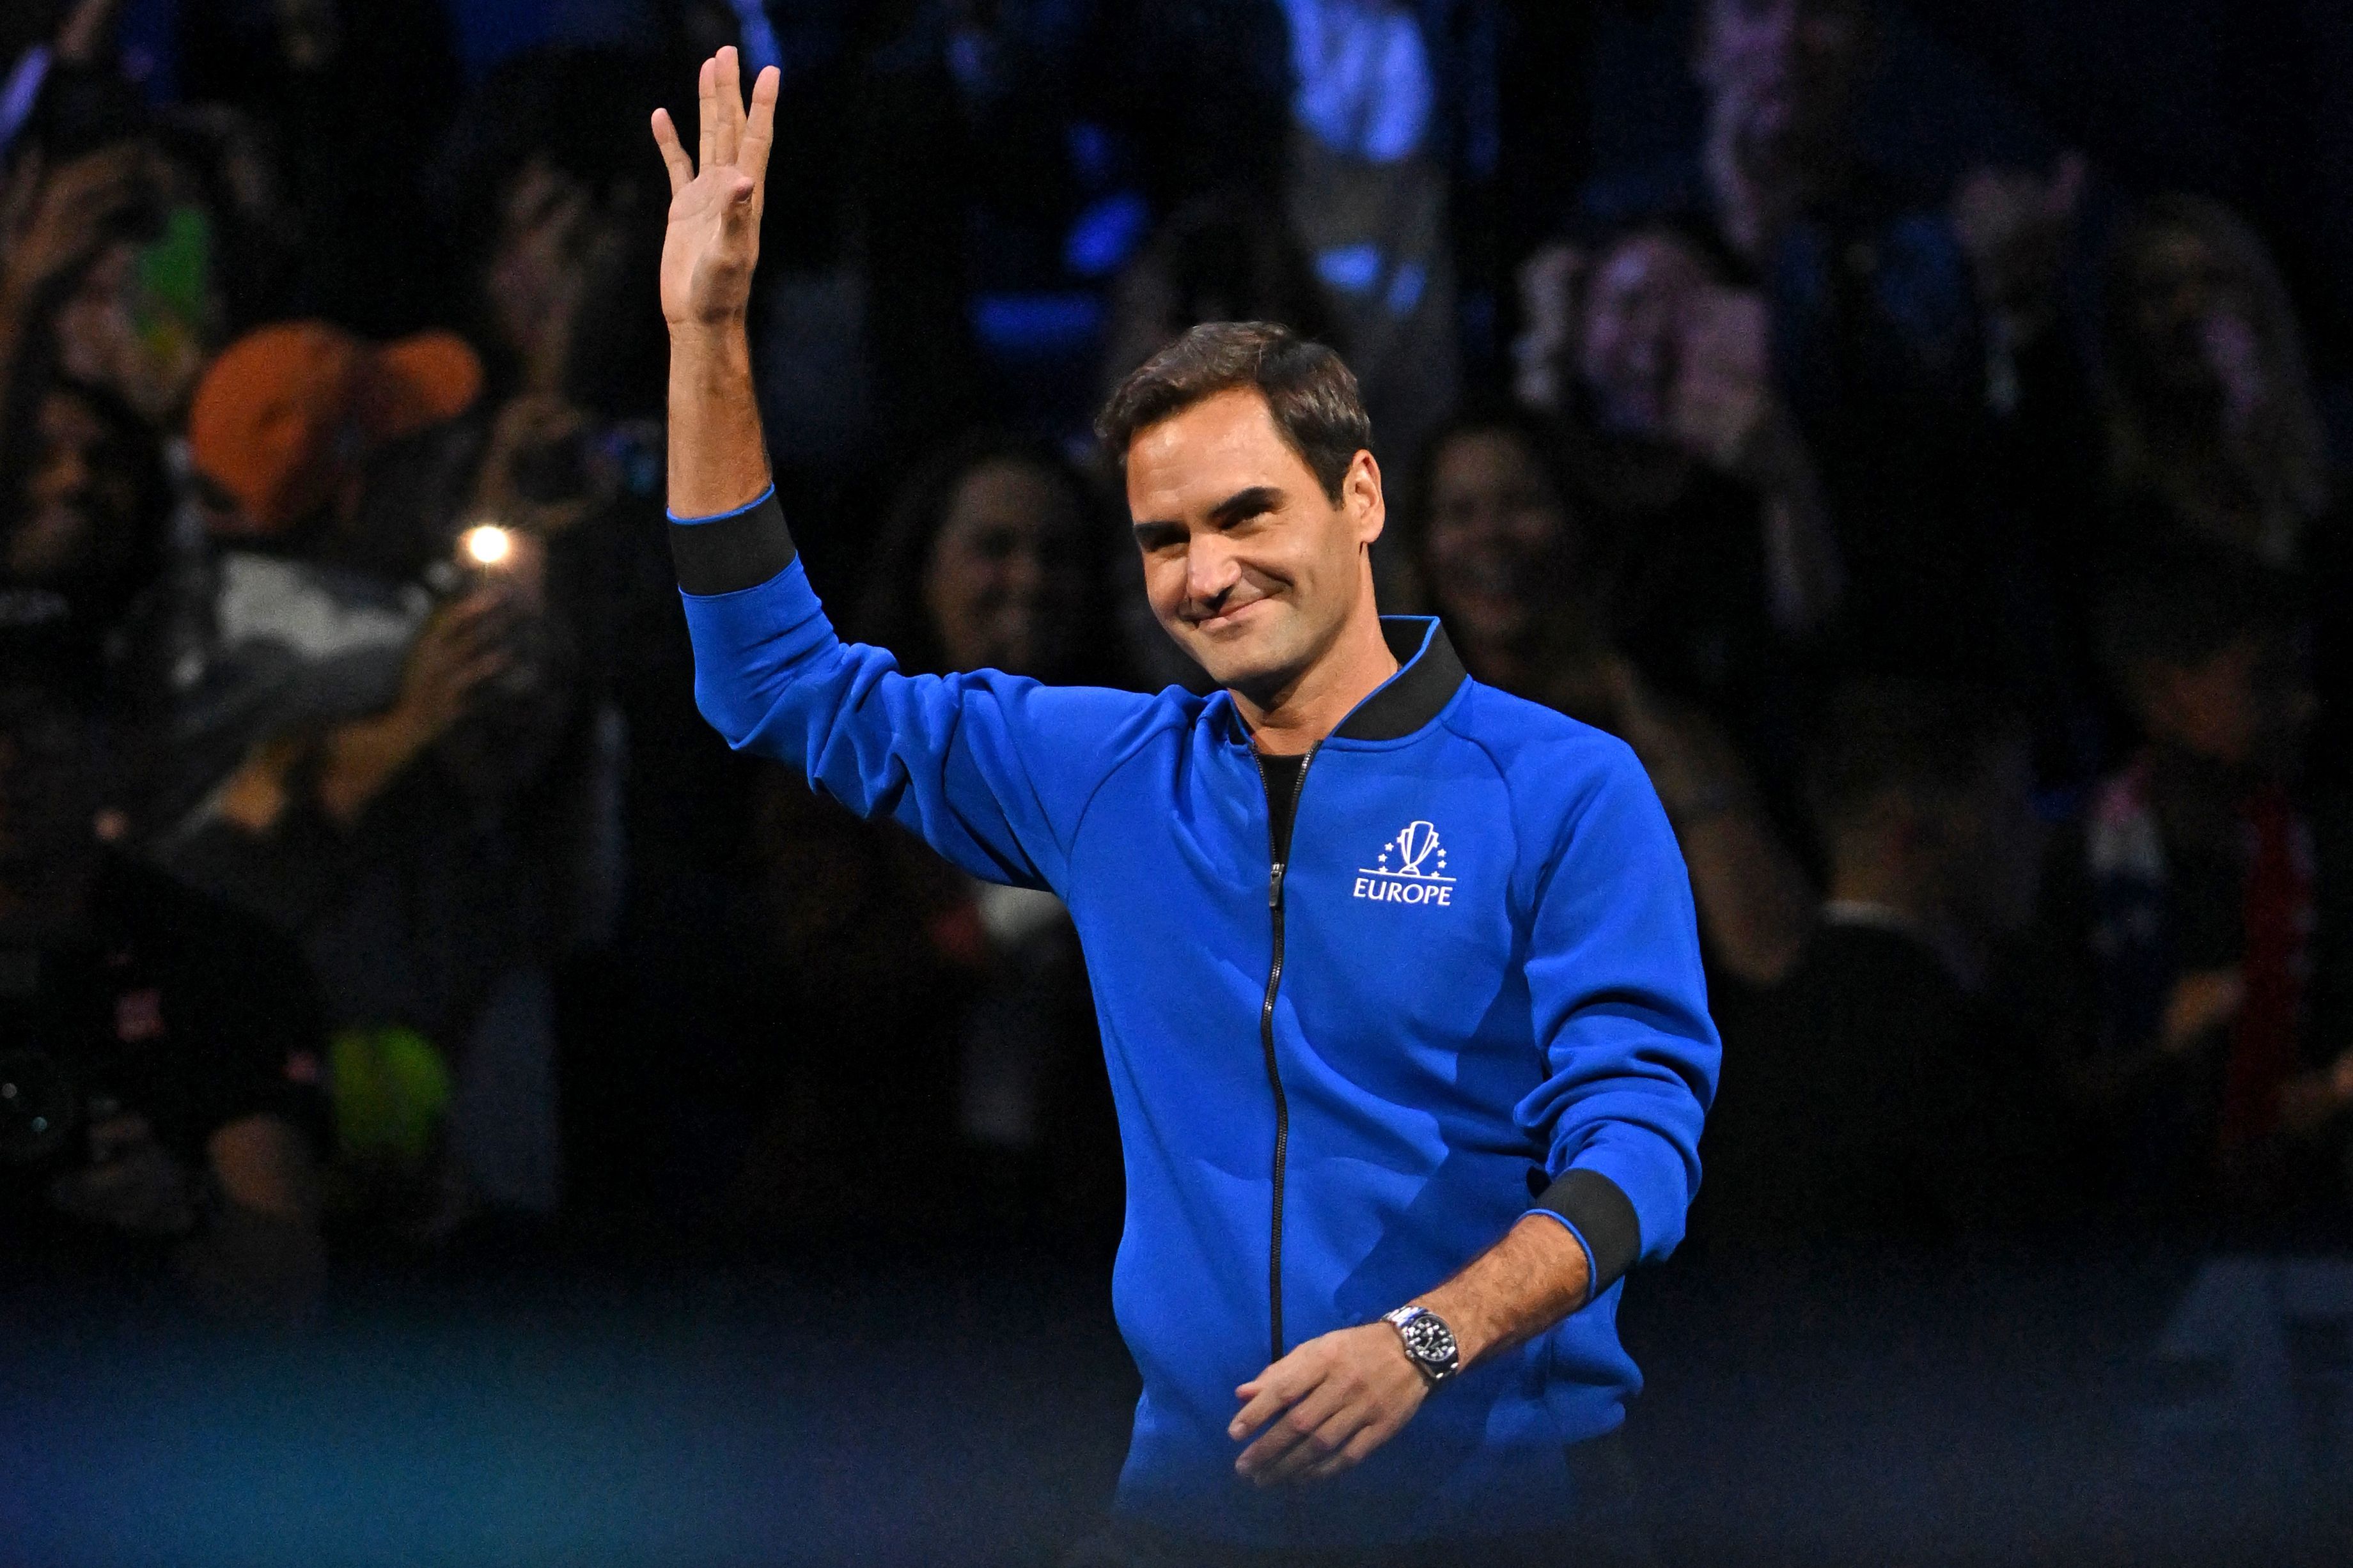 Roger Federers Final Match Saw Him Wearing a Unique Rolex